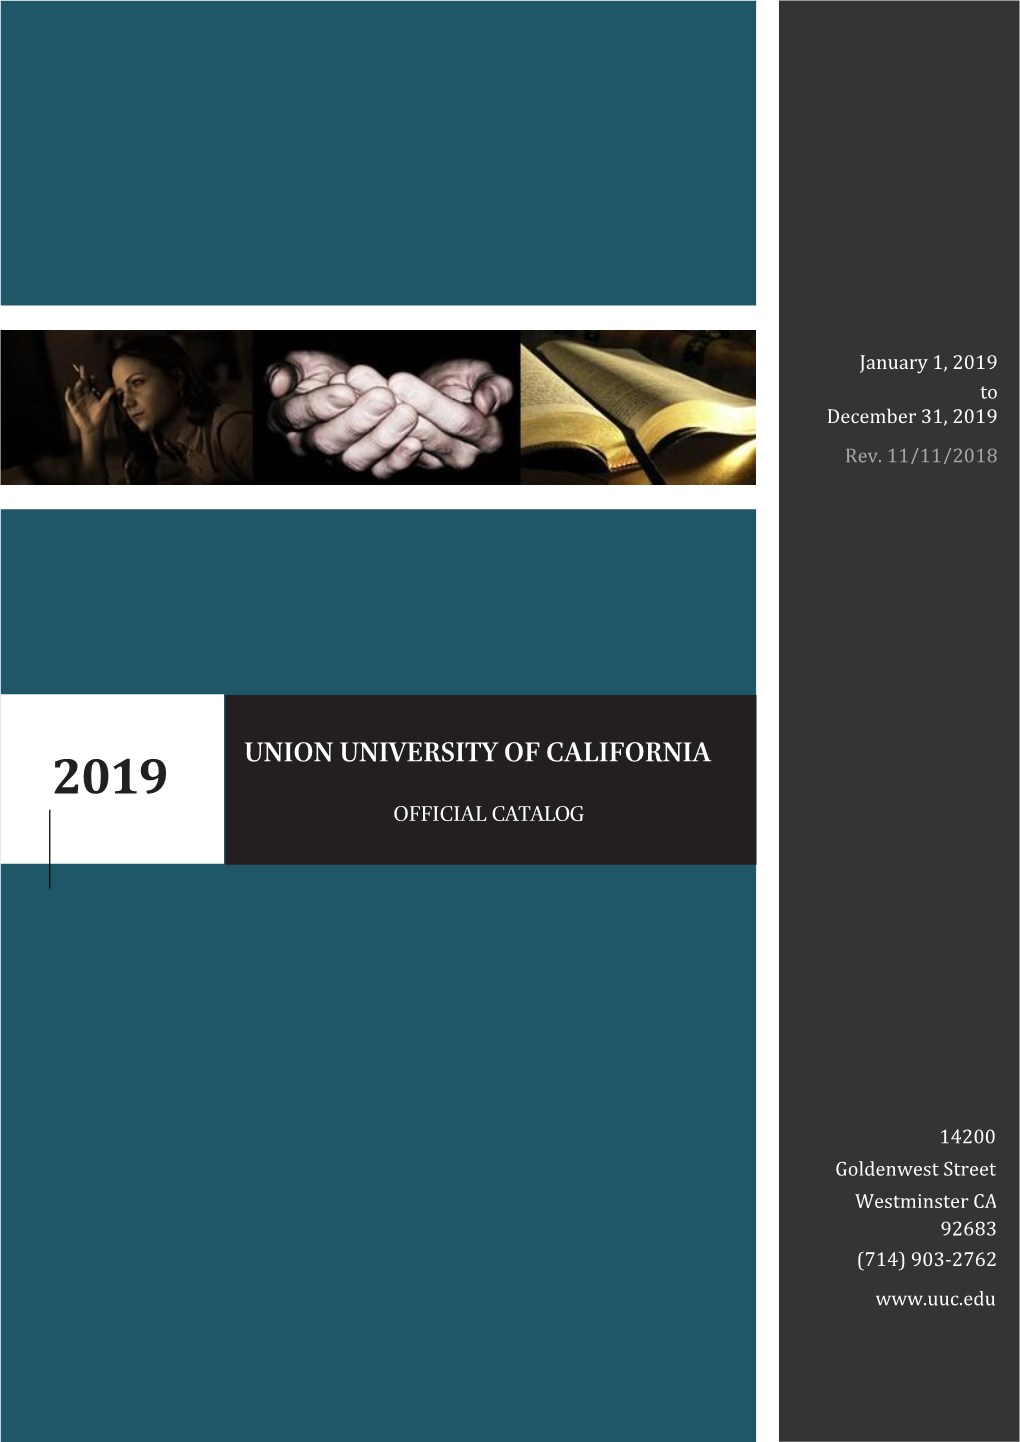 Union University of California 20120189 Official Catalog 8